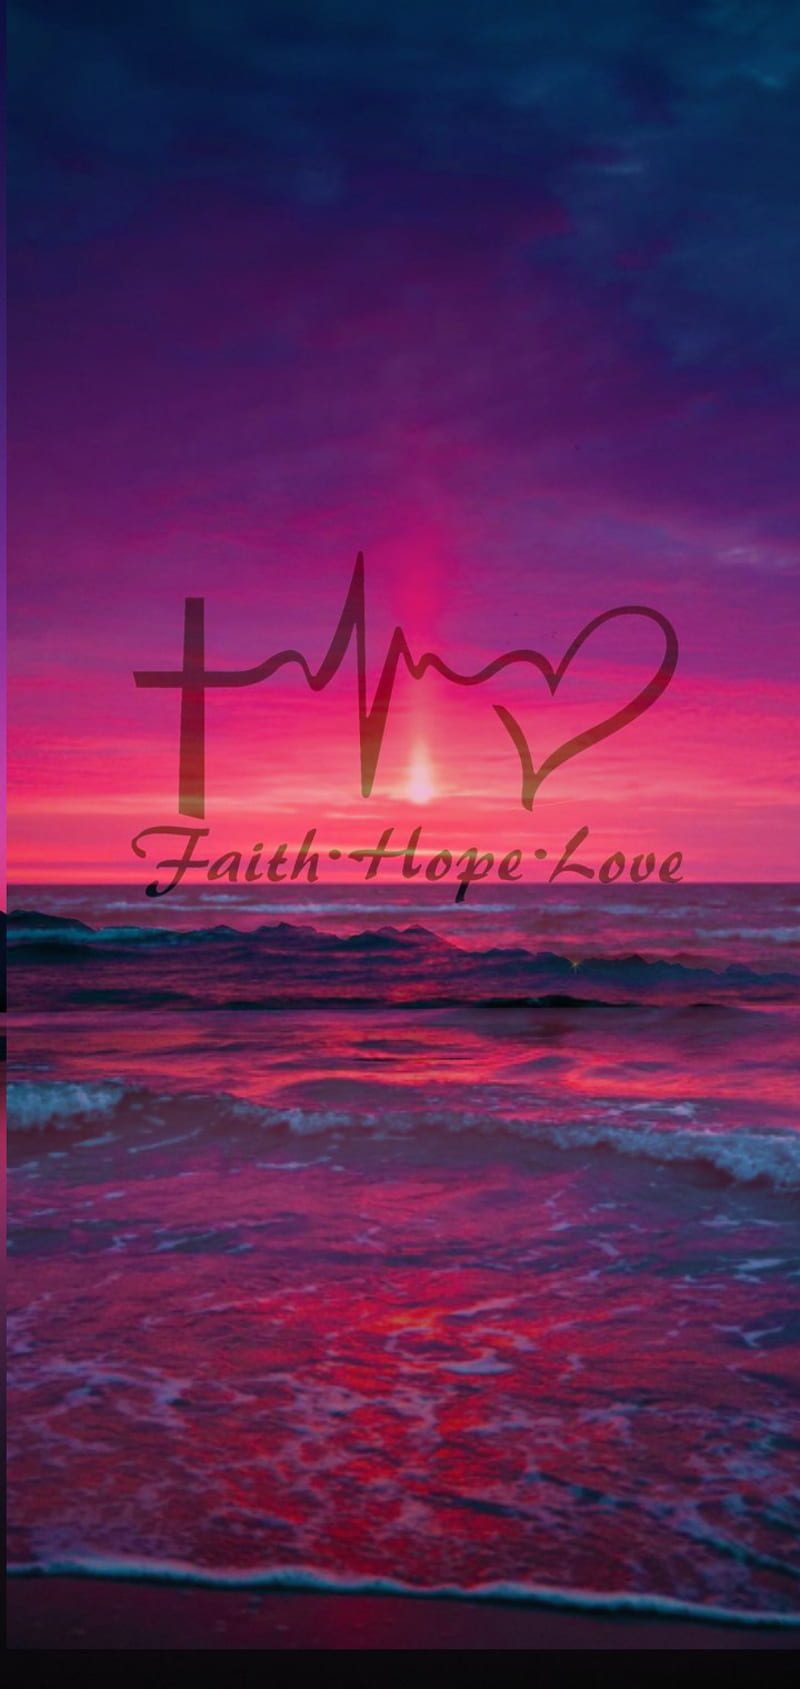 Love joy faith hope peace quotes HD wallpaper  Wallpaperbetter